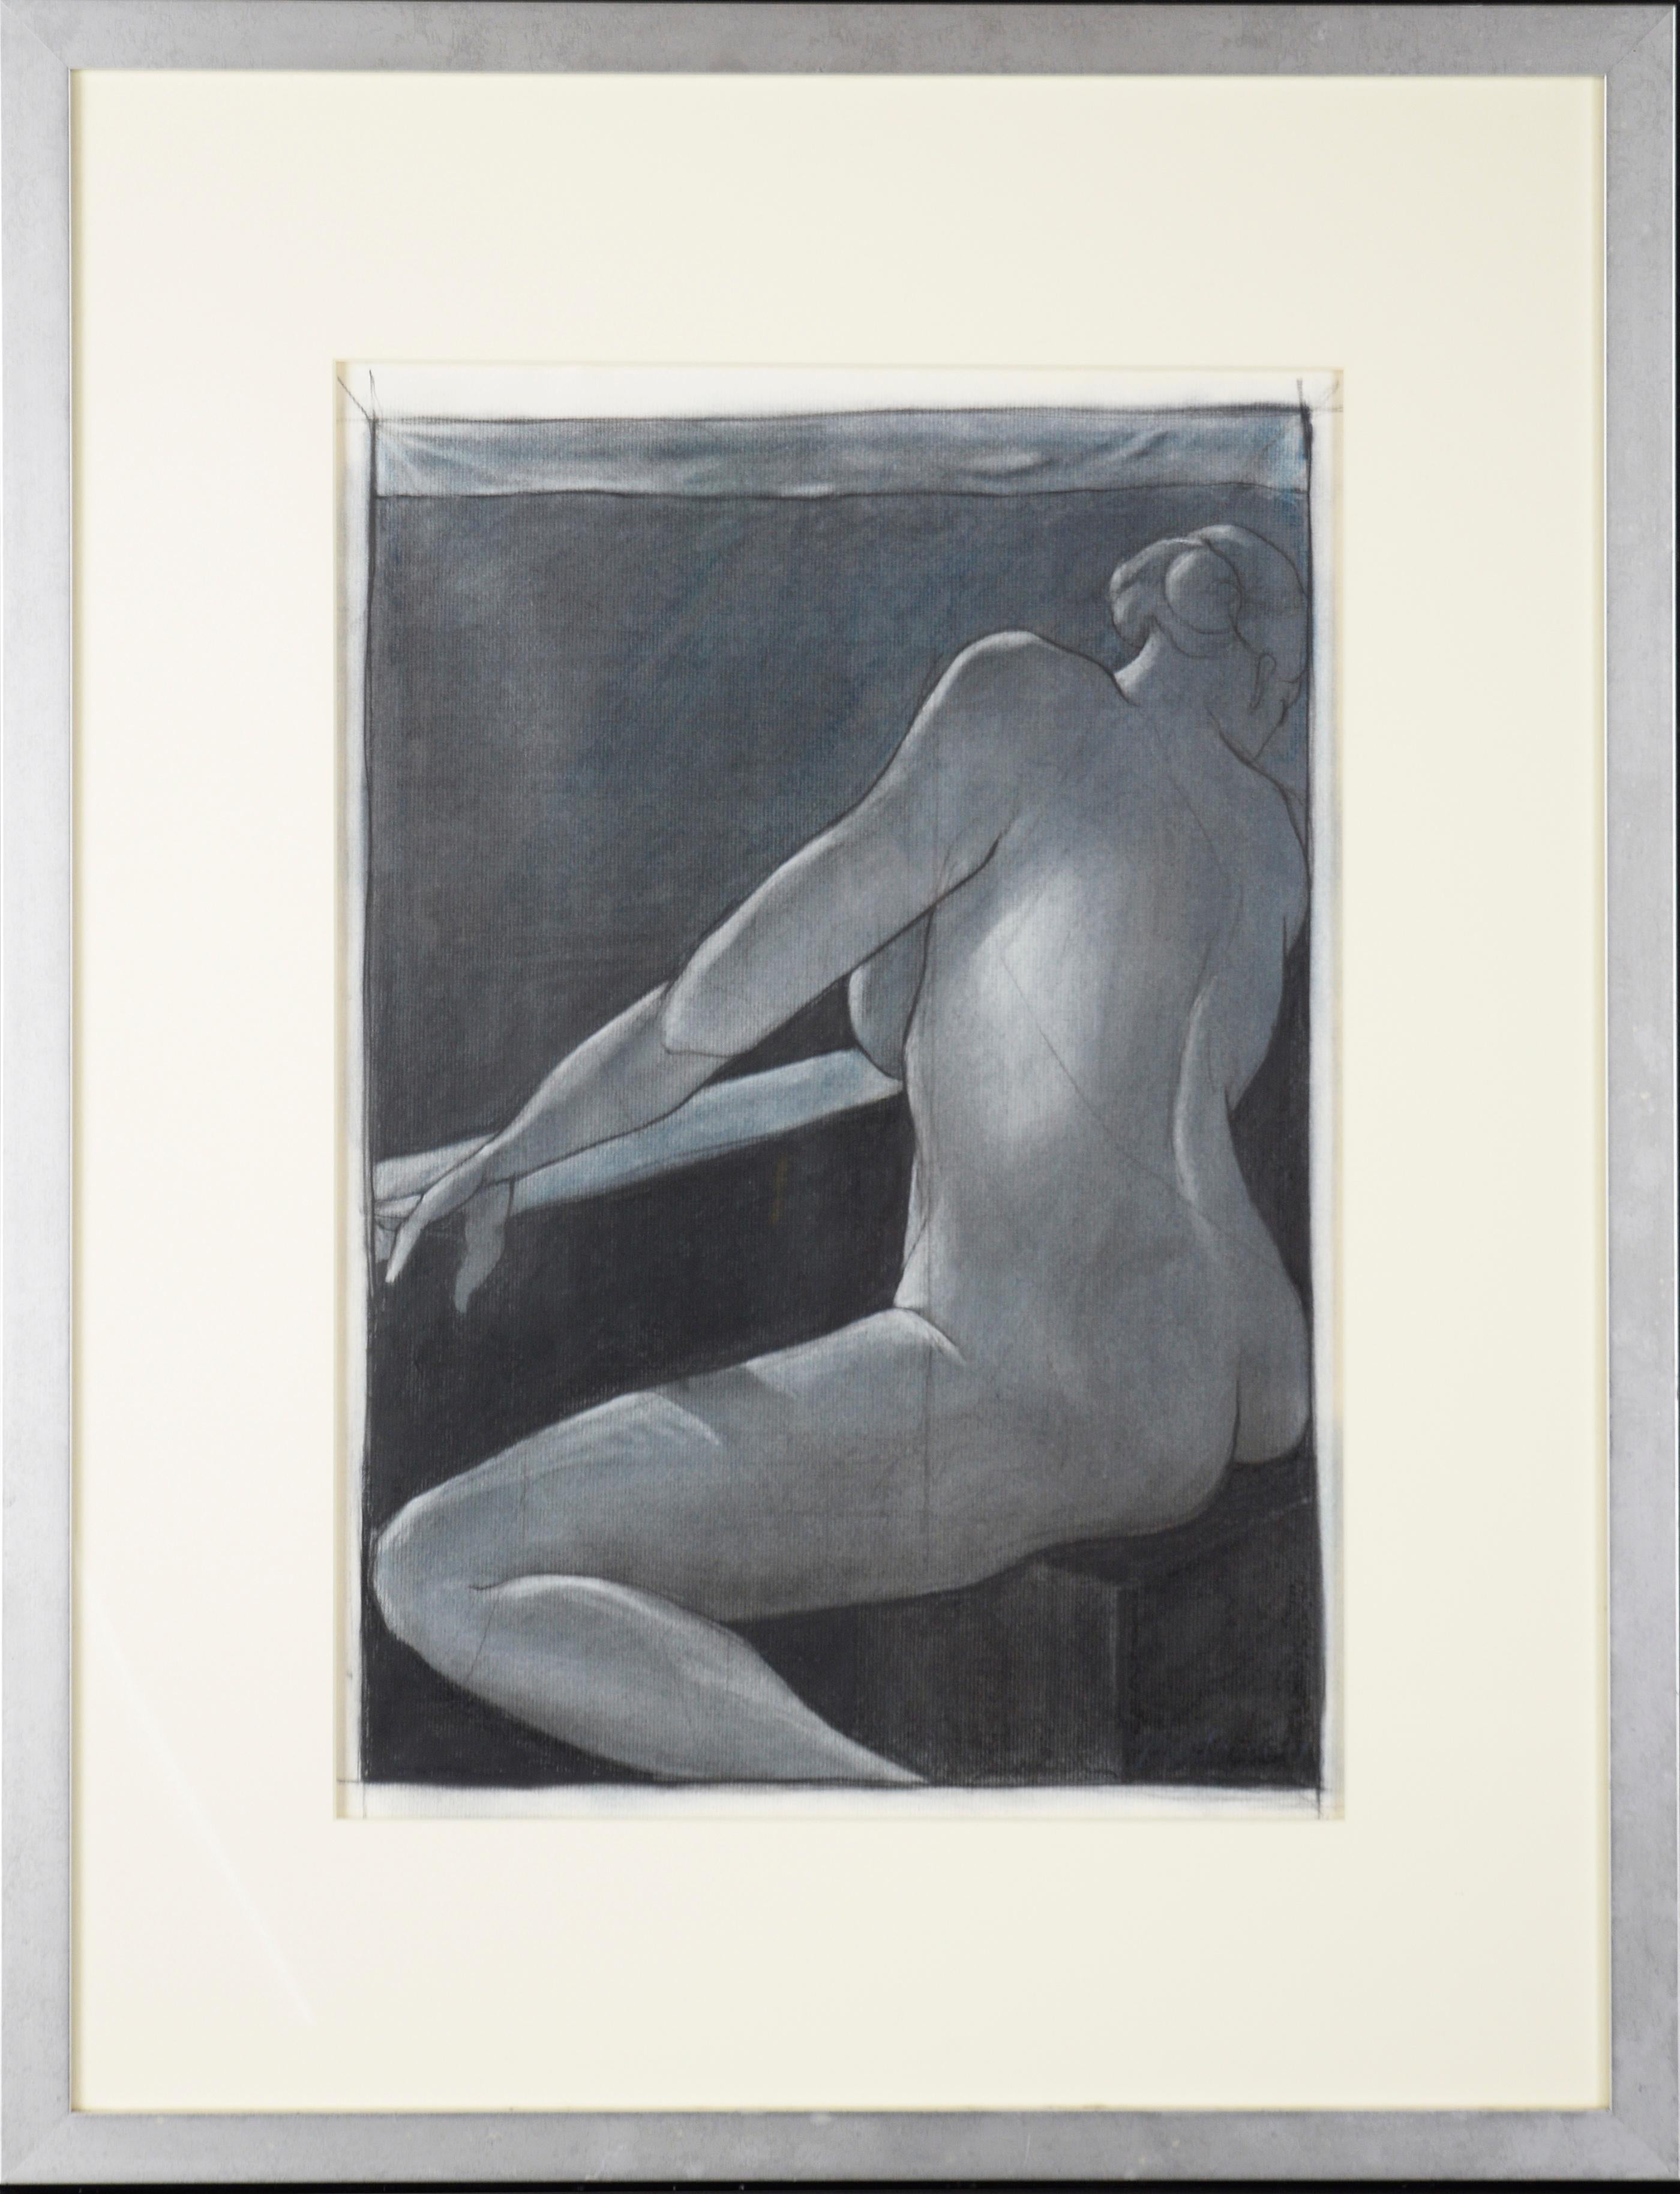 John Bowler Figurative Painting - "Moonlight Sonata" Figurative Nude Original Painting